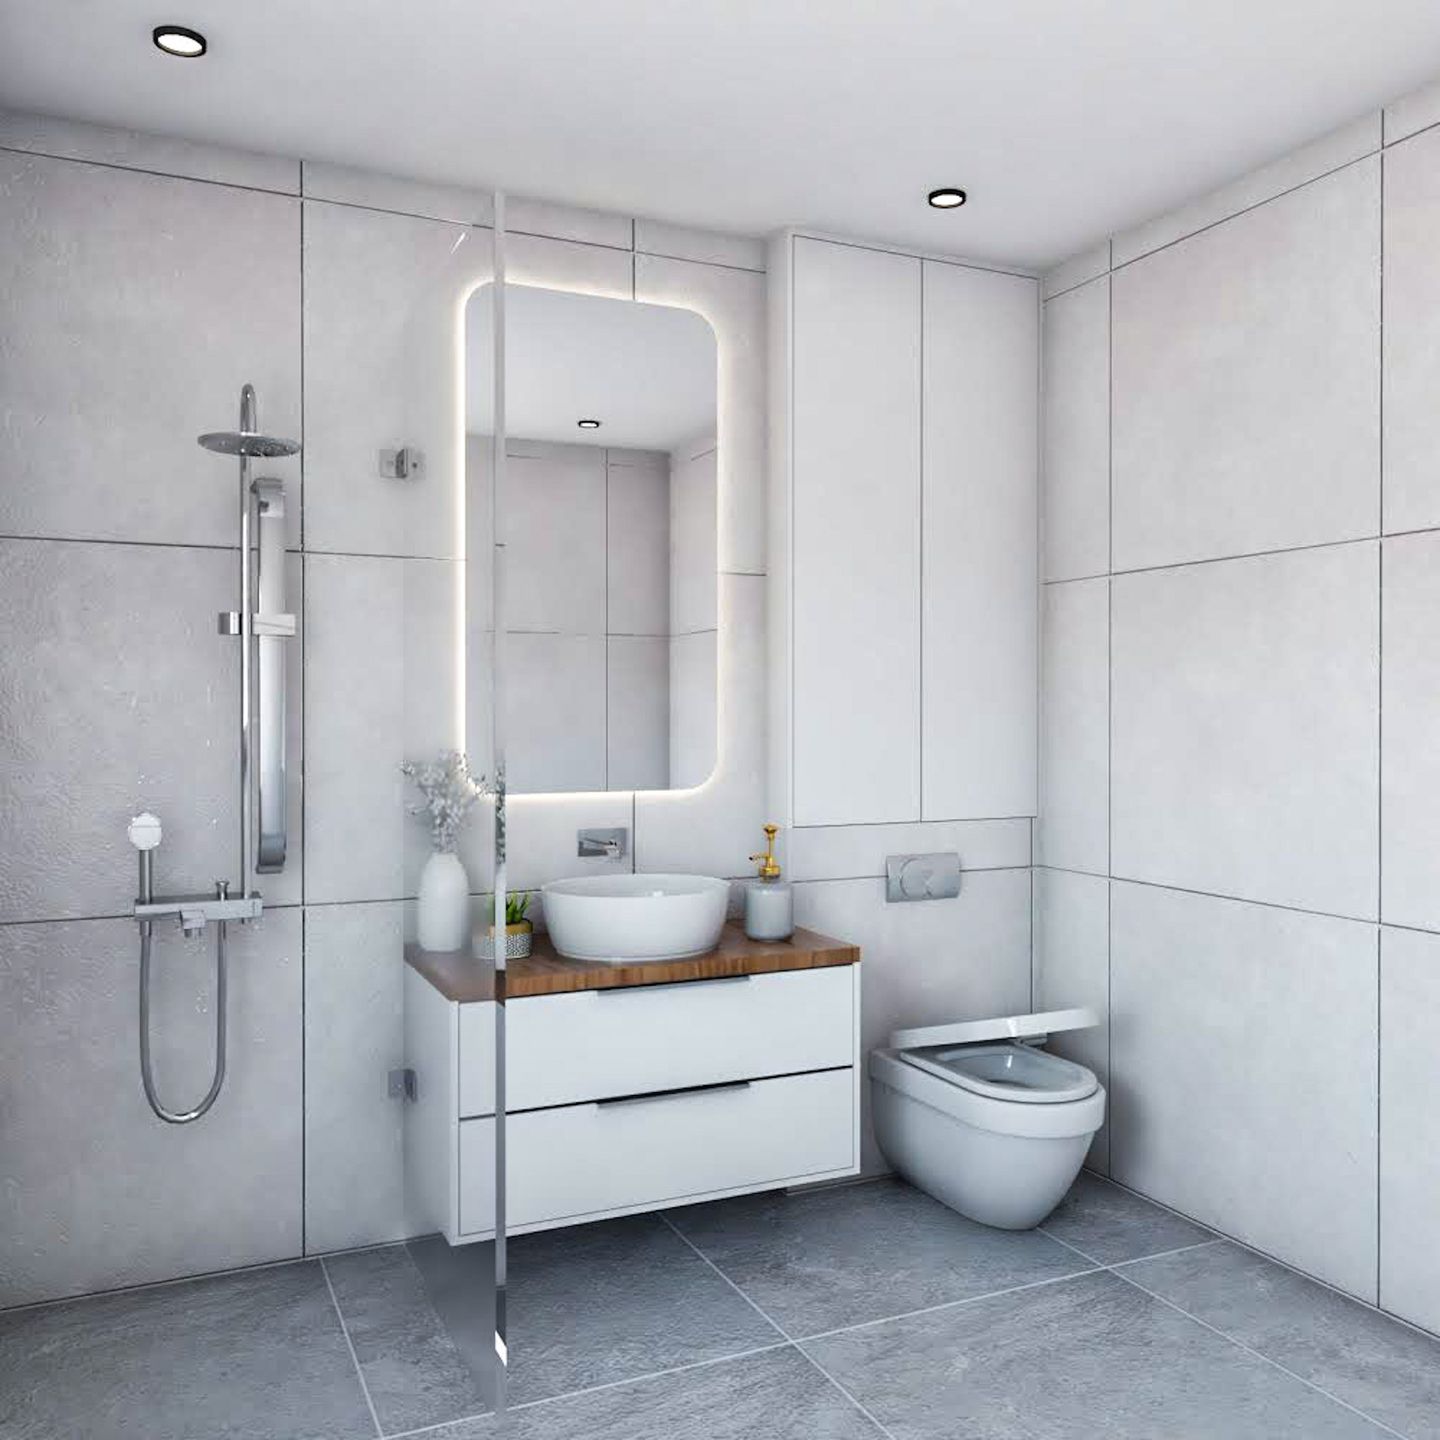 Pristine White Spacious Bathroom Design With Minimal Interiors - Livspace